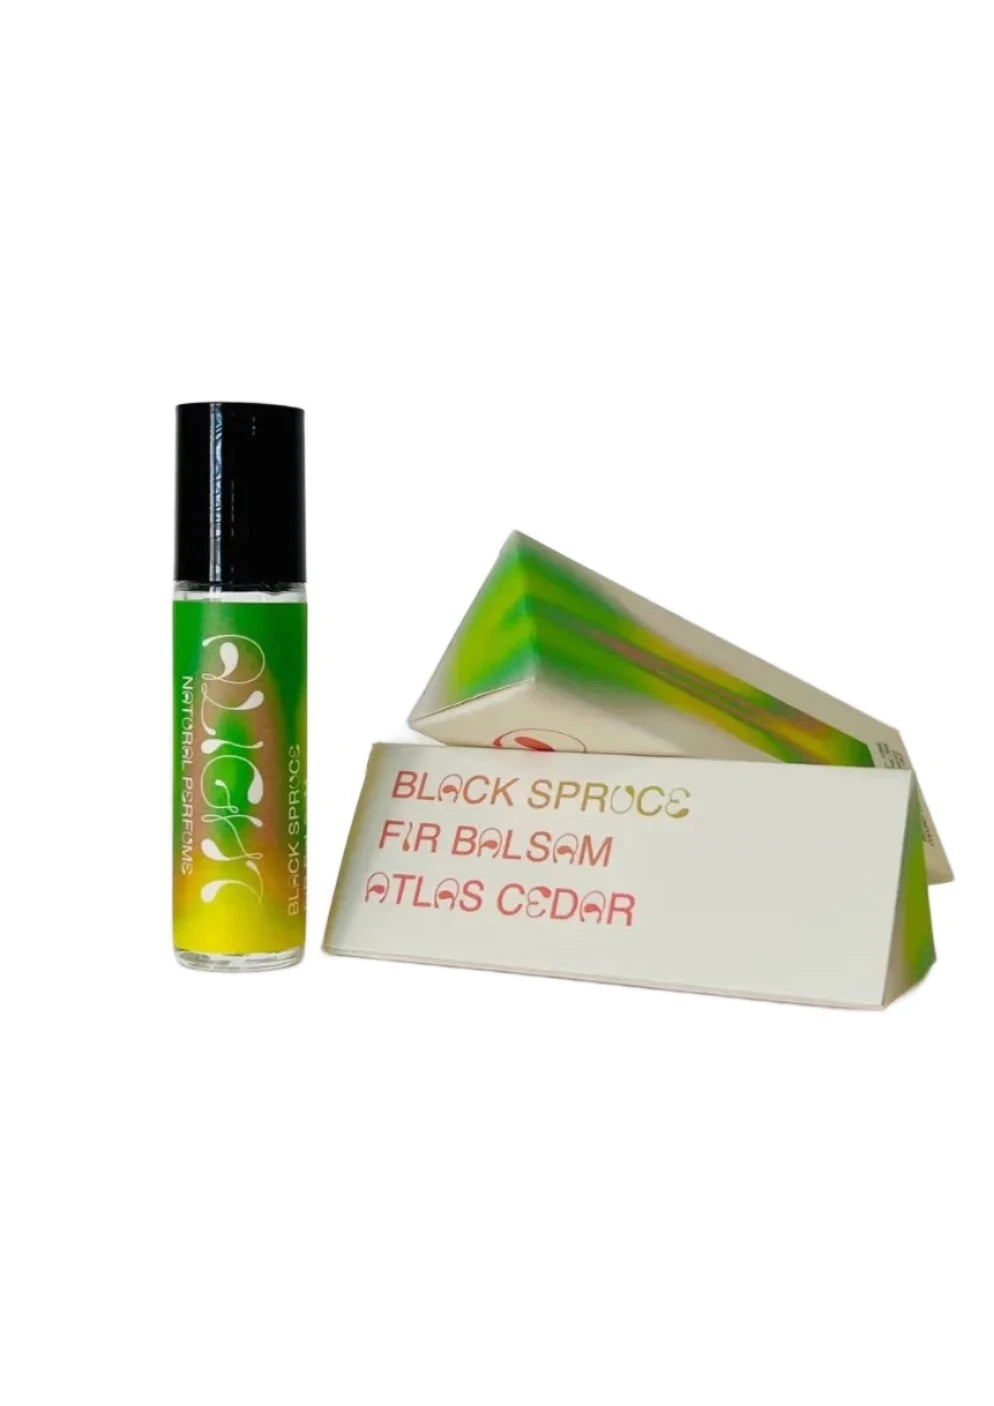 Black Spruce & Fir Balsam & Atlas Cedar // Perfume